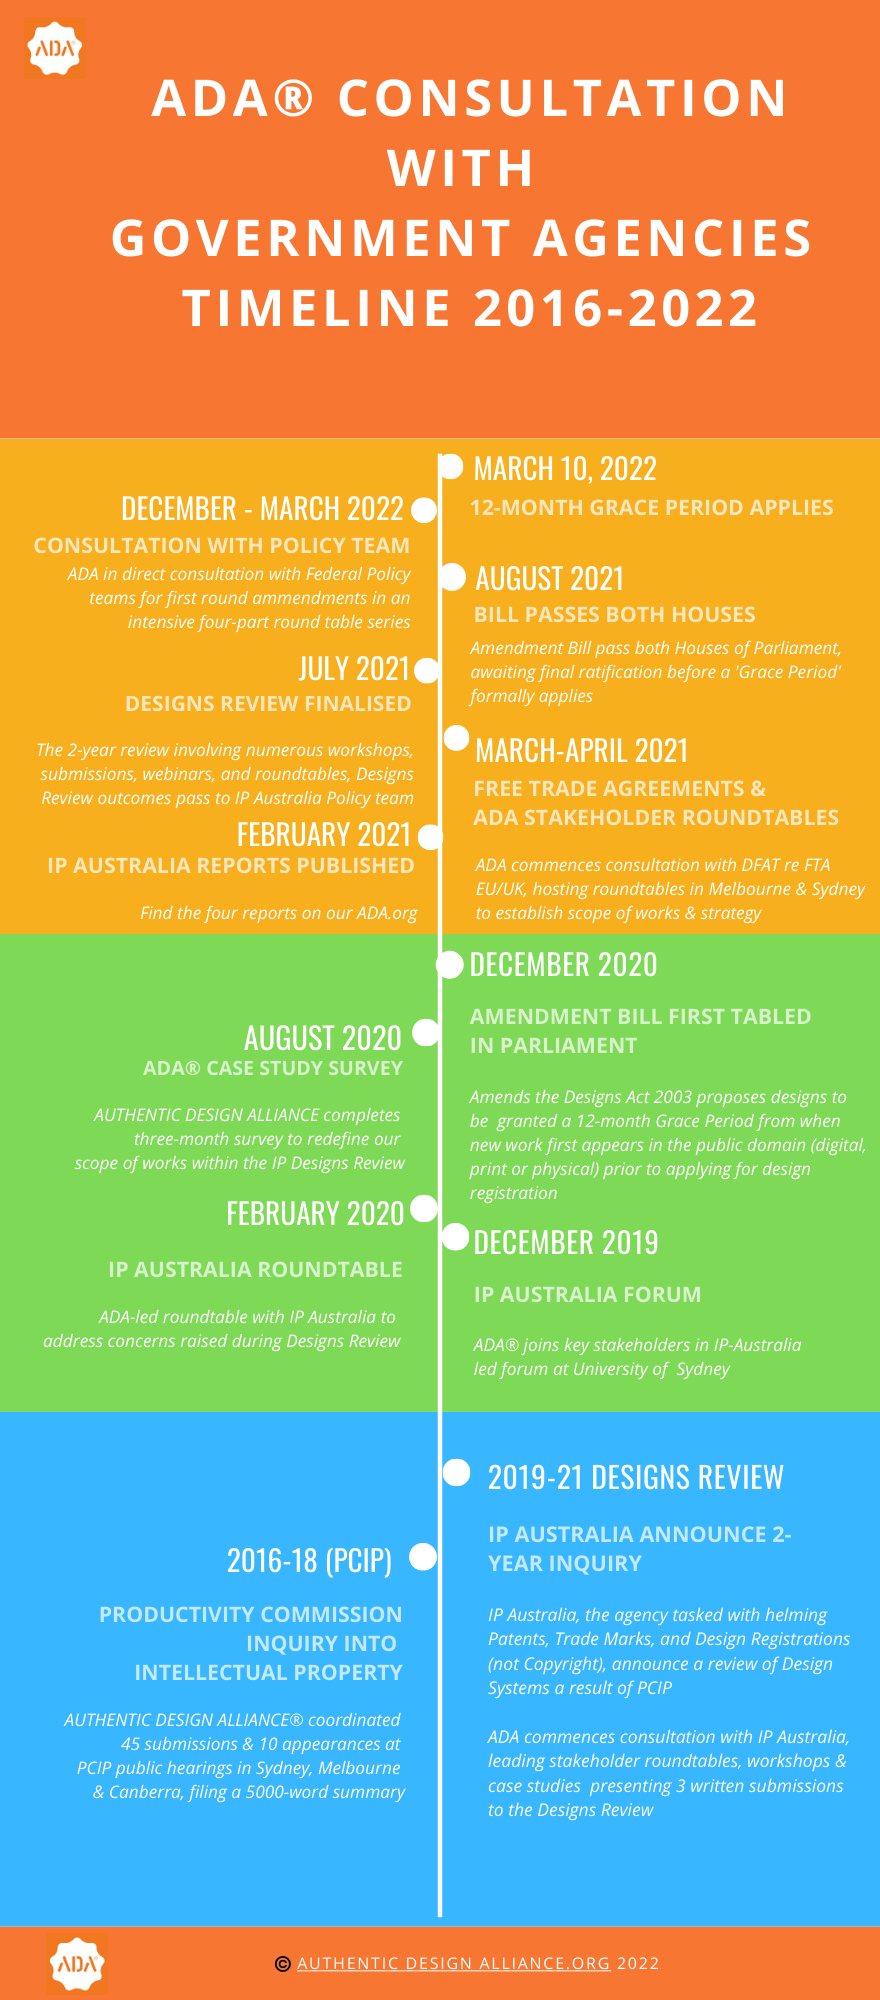 ADA Government Consultation timeline 2016-2022